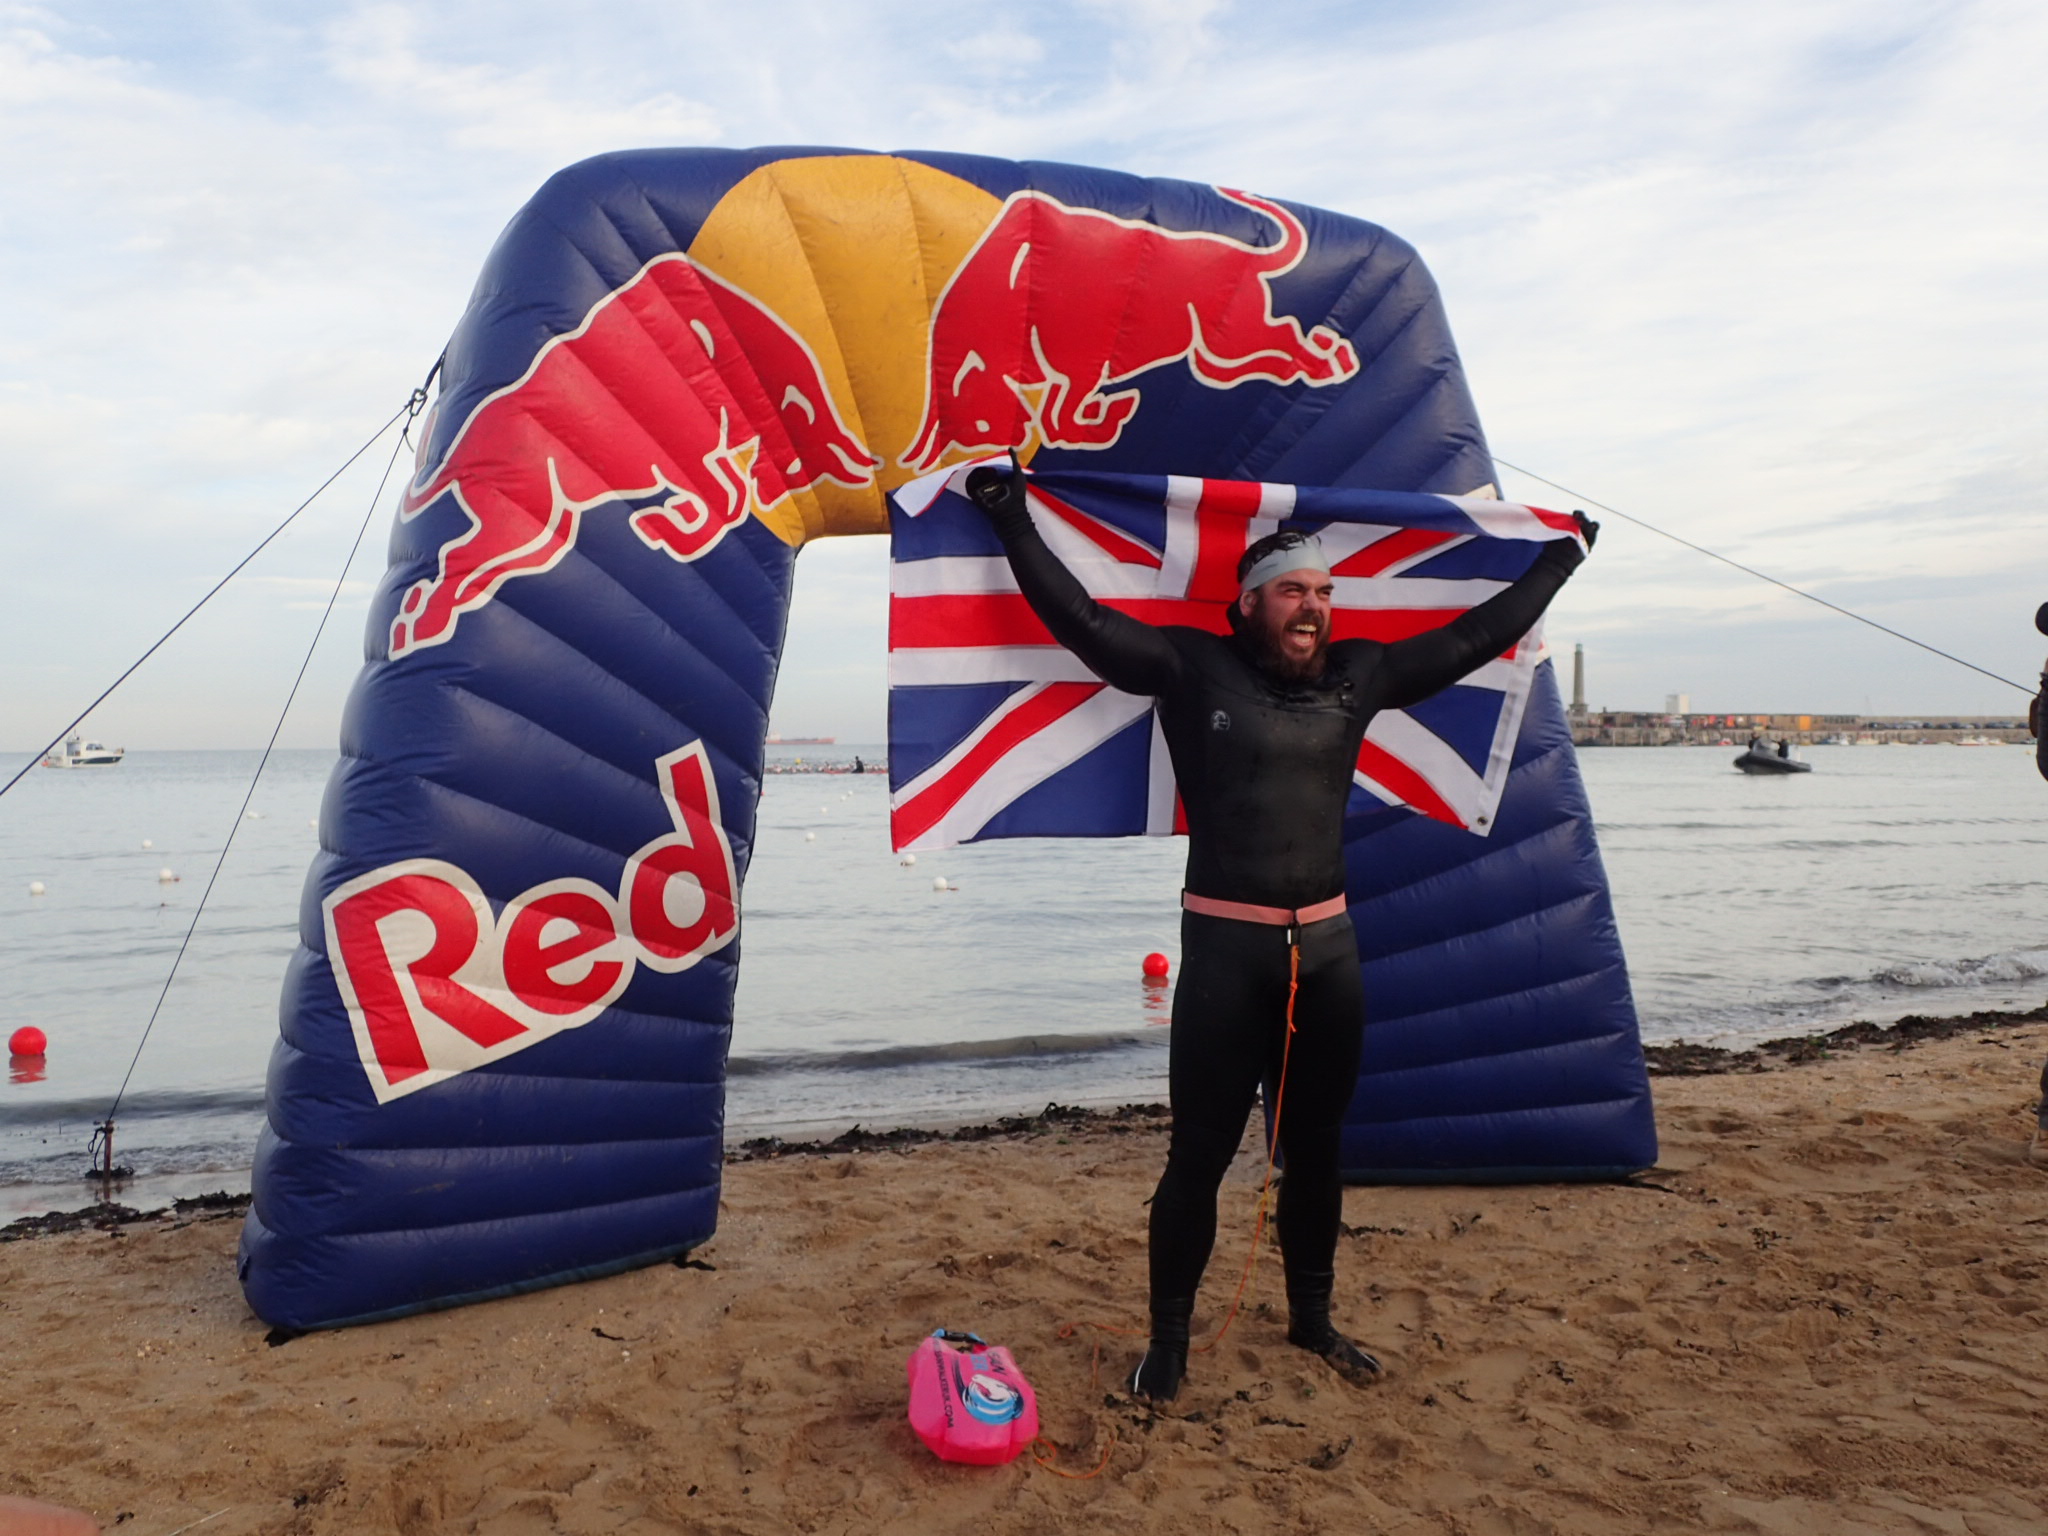 Ross Edgley finishes the Great British Swim after 157 days at sea. Image: 220/Gavin Parish